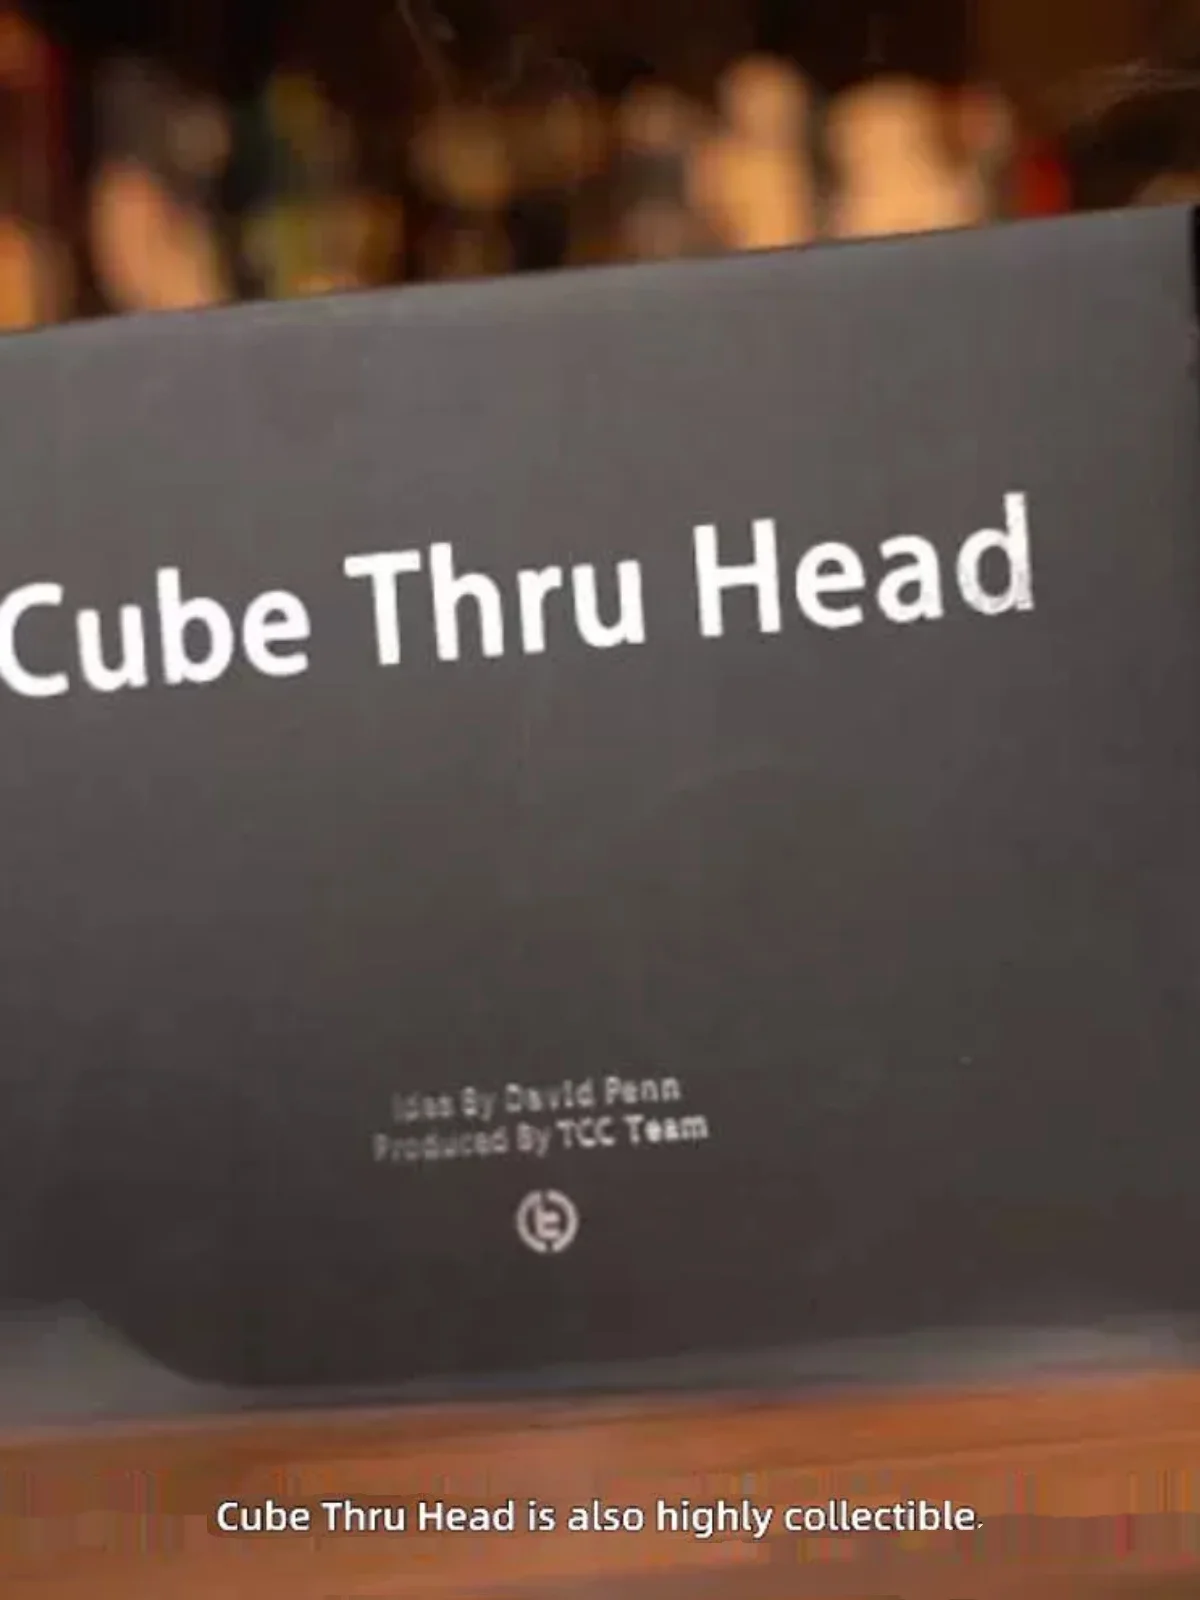 

Cube Thru Head от David Penn-волшебные фокусы